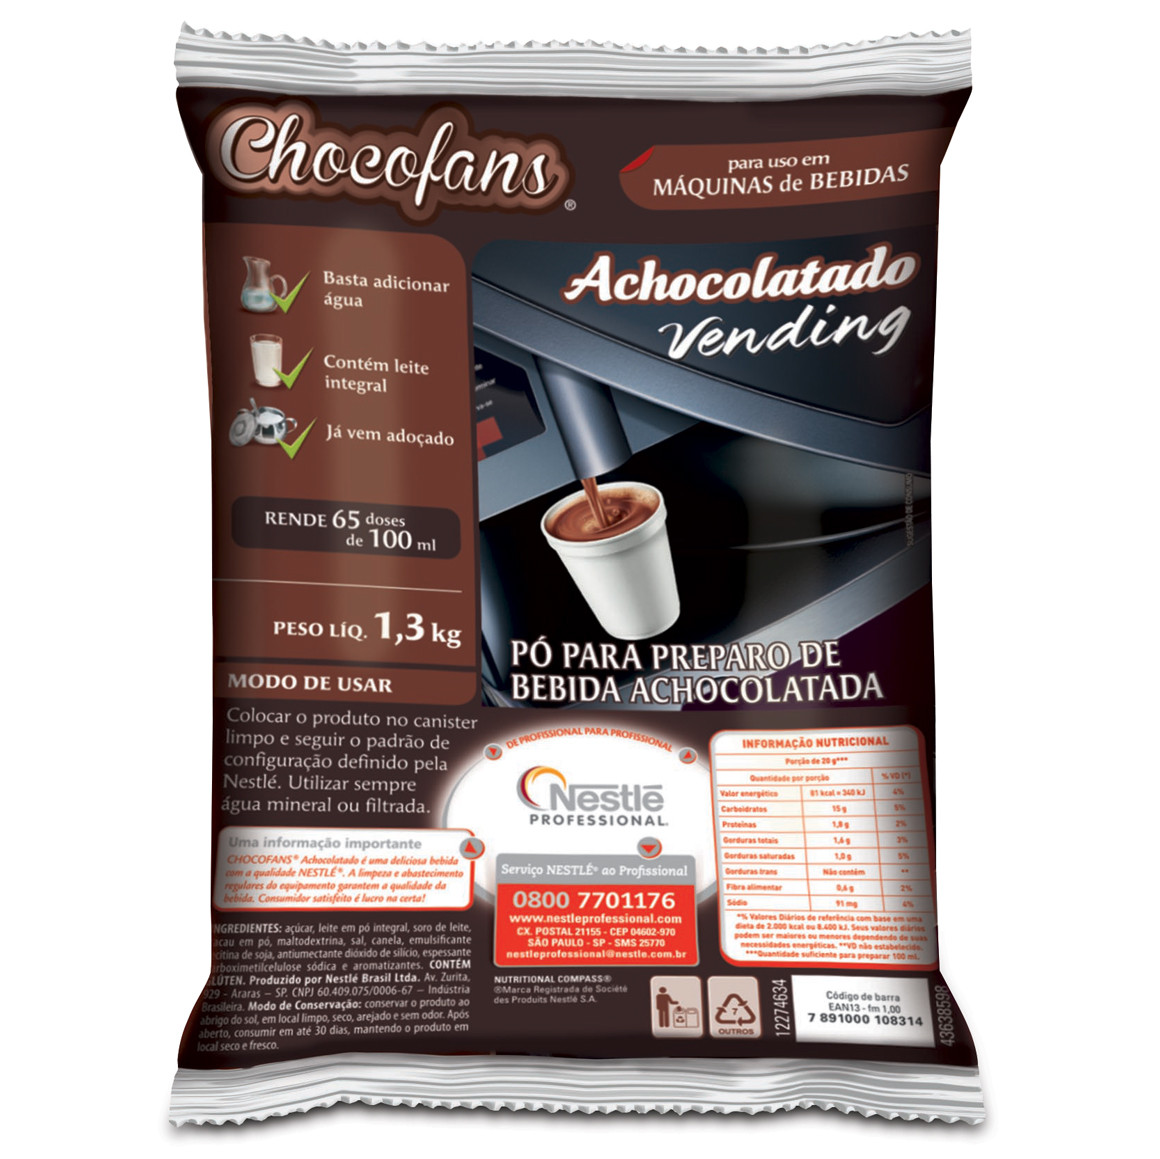 Achocolatado Vending Chocofans Nestlé - 1,3 kg